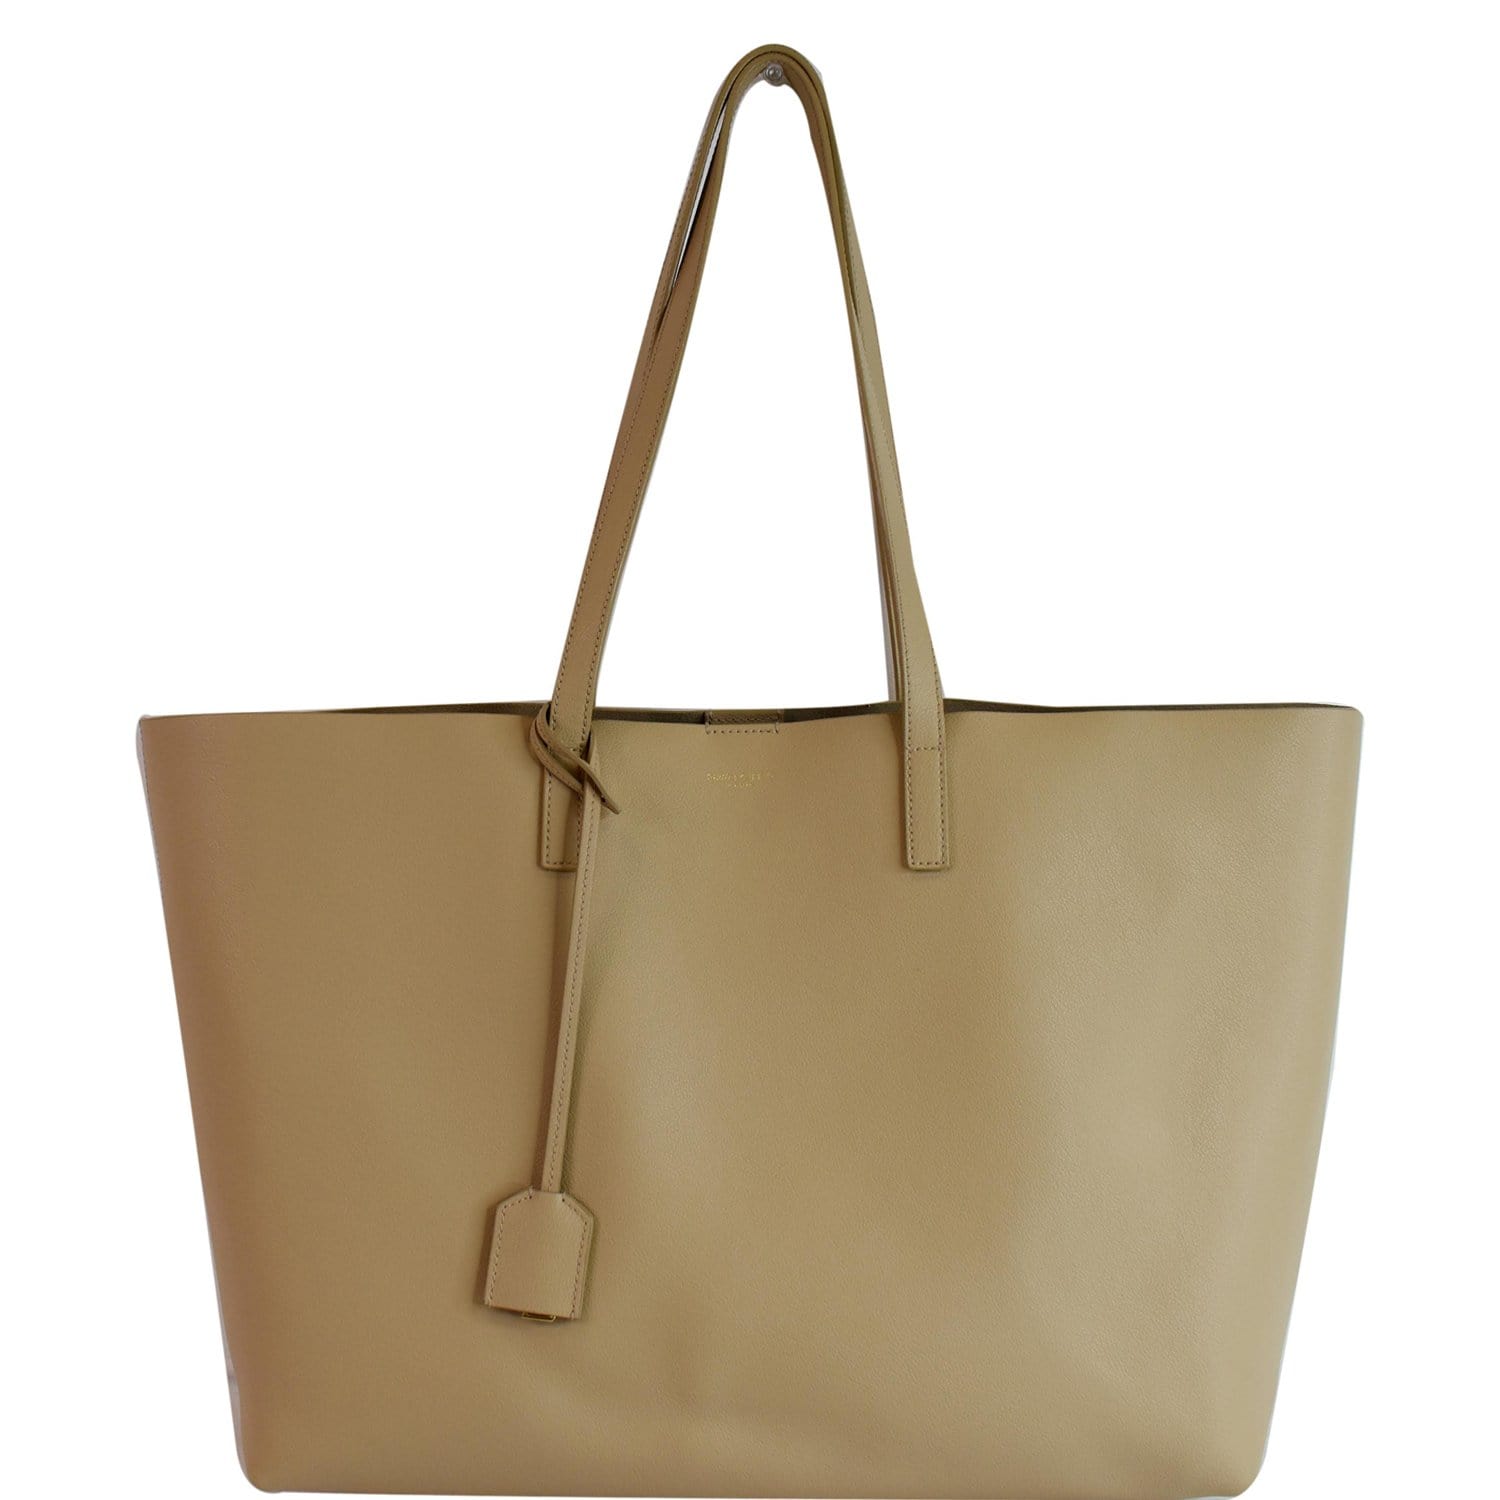 Yves Saint Laurent Handbags for sale in San Diego, California, Facebook  Marketplace